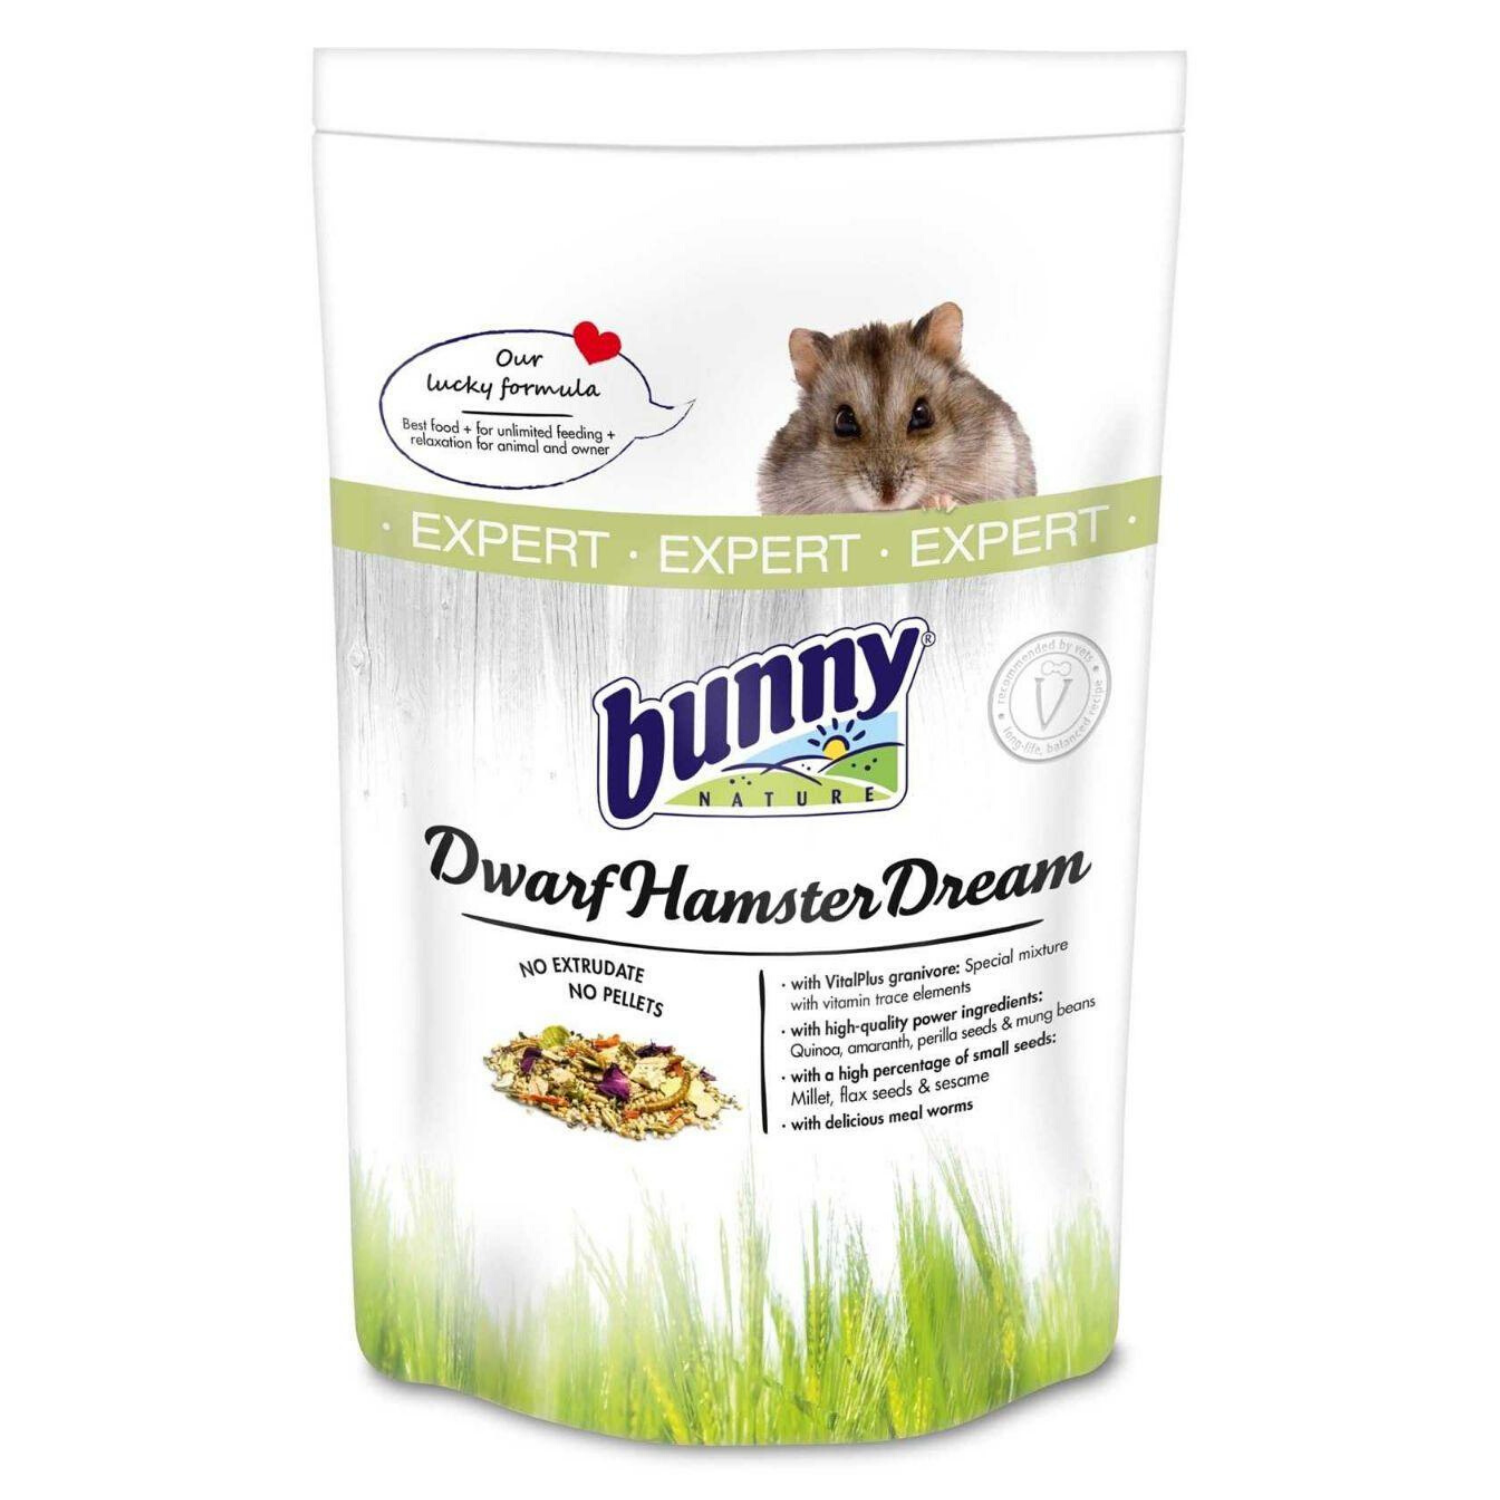 Bunny Nature Dwarf Hamster Dream Expert - 500g / 3.2kg